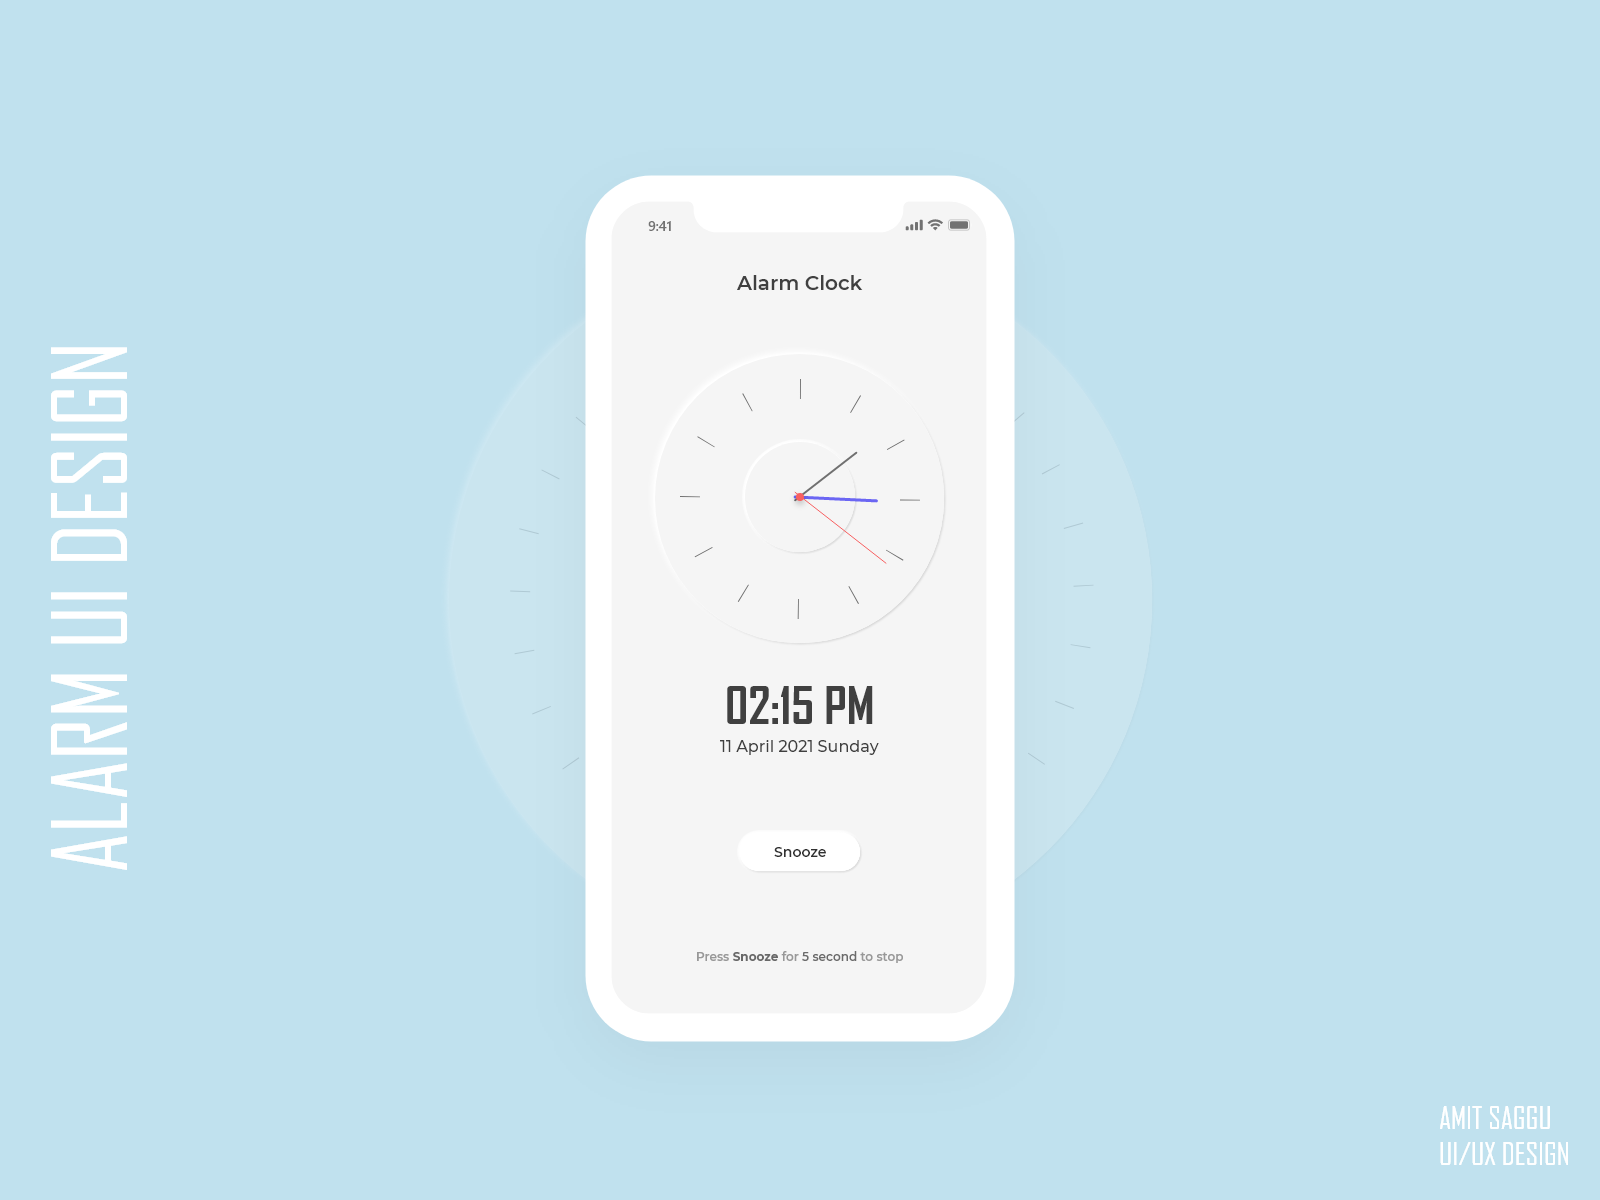 Alarm Clock UI Design by Amit Saggu on Dribbble